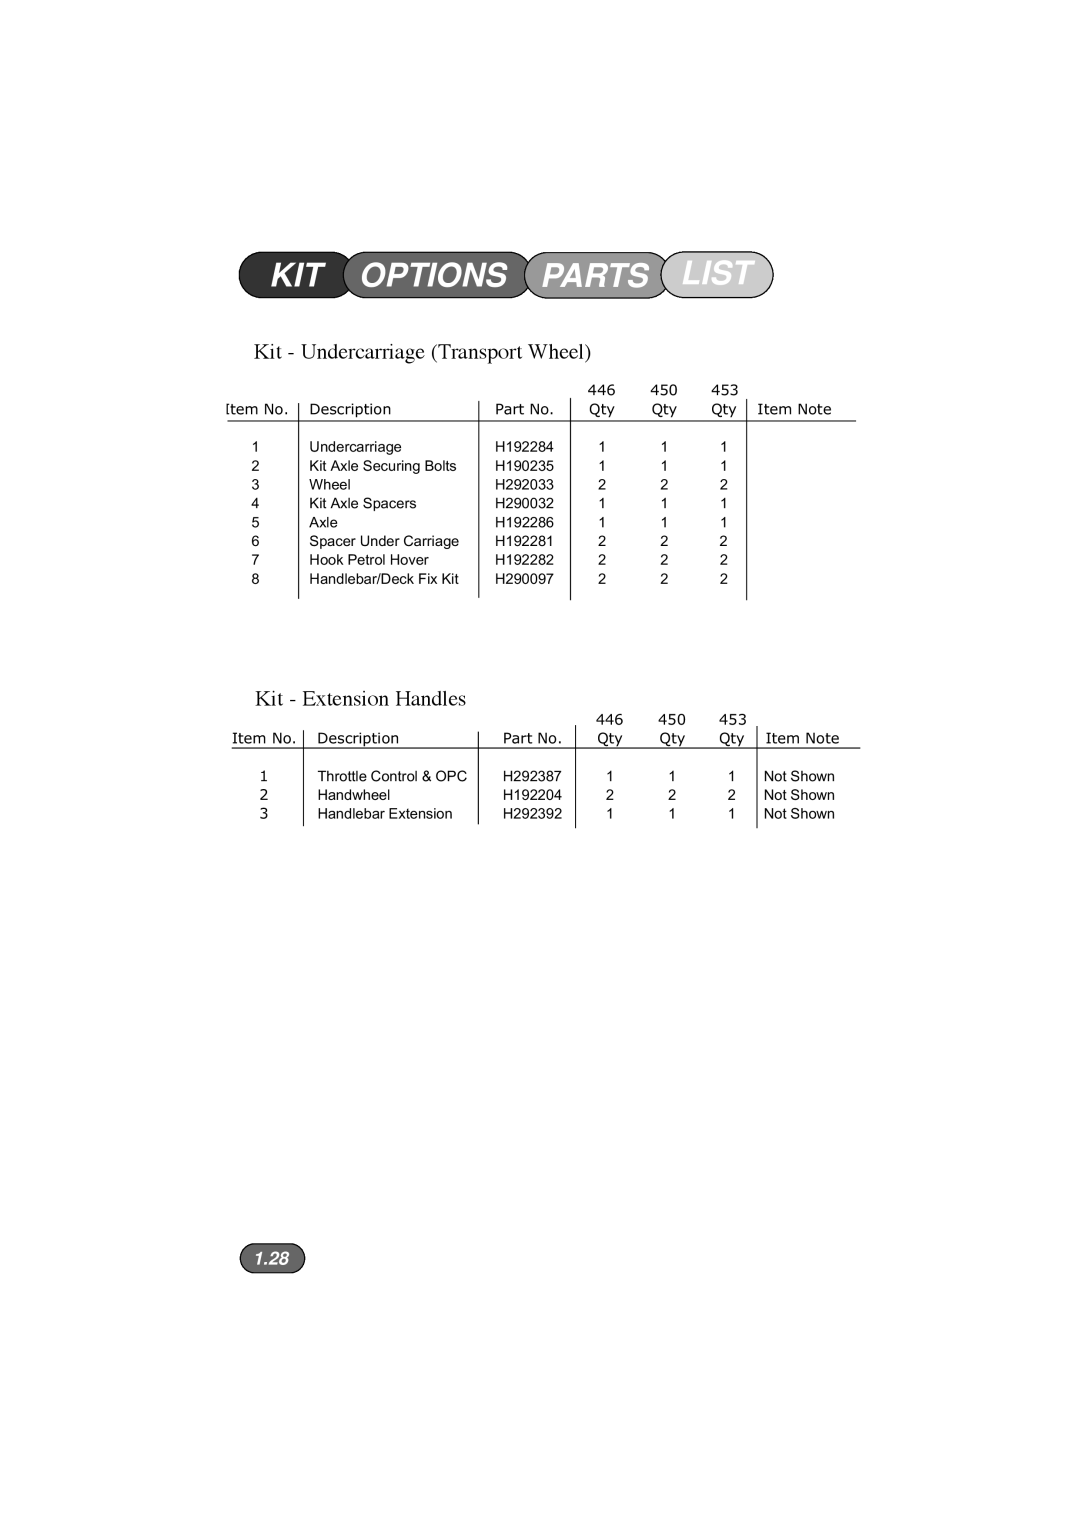 Hayter Mowers 453, 446, 450 manual Kit - Undercarriage Transport Wheel, Kit - Extension Handles, 1.28, Options, Parts, List 